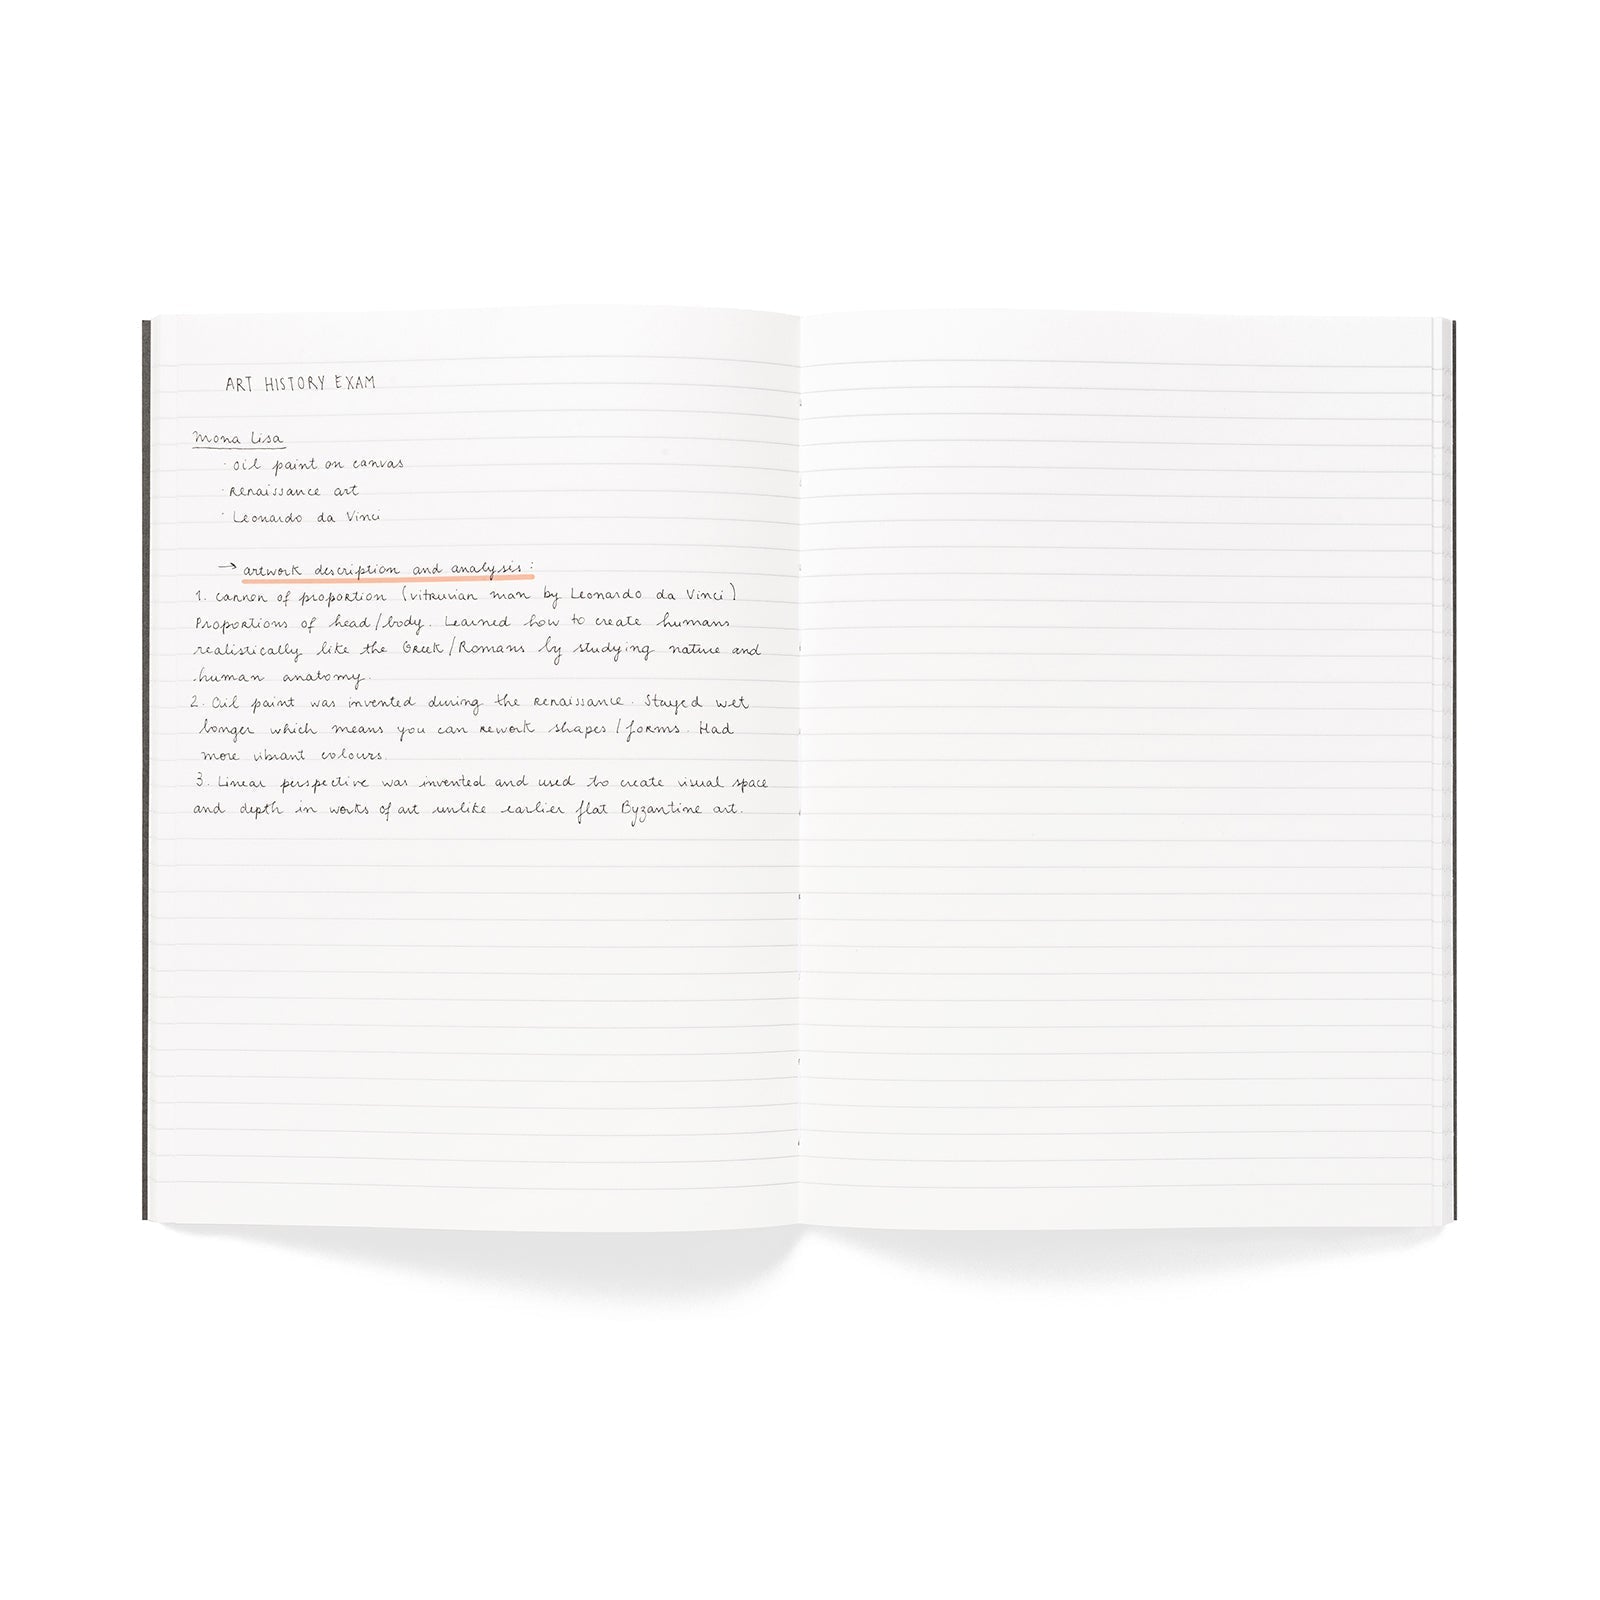 Mishmash - Naked Grey - Ruled-Notebook-DutchMills